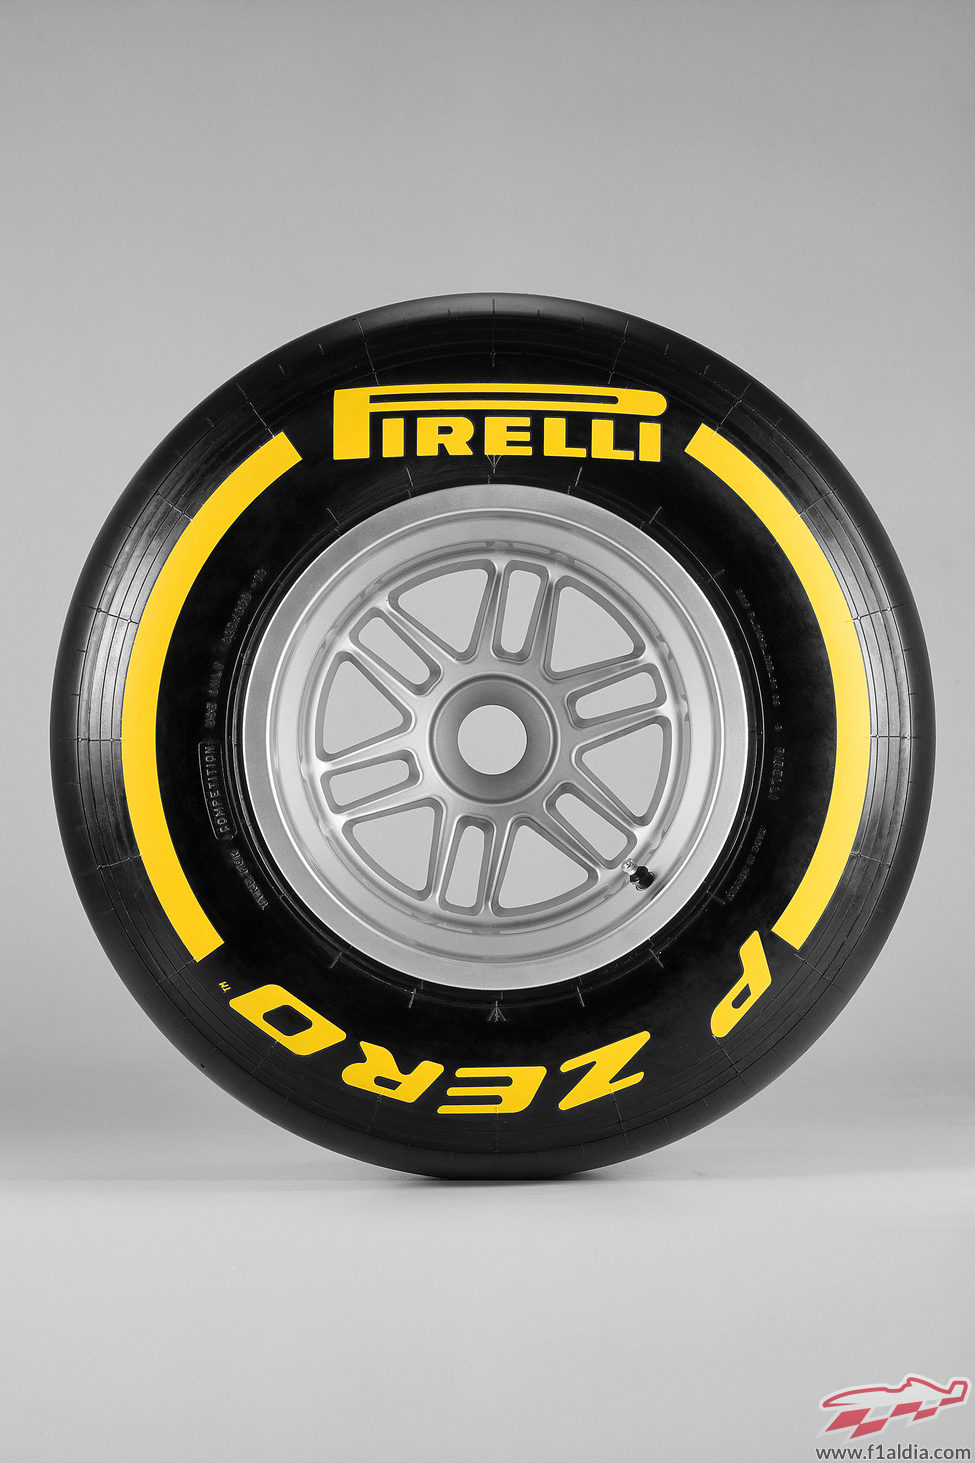 Pirelli blando para 2013